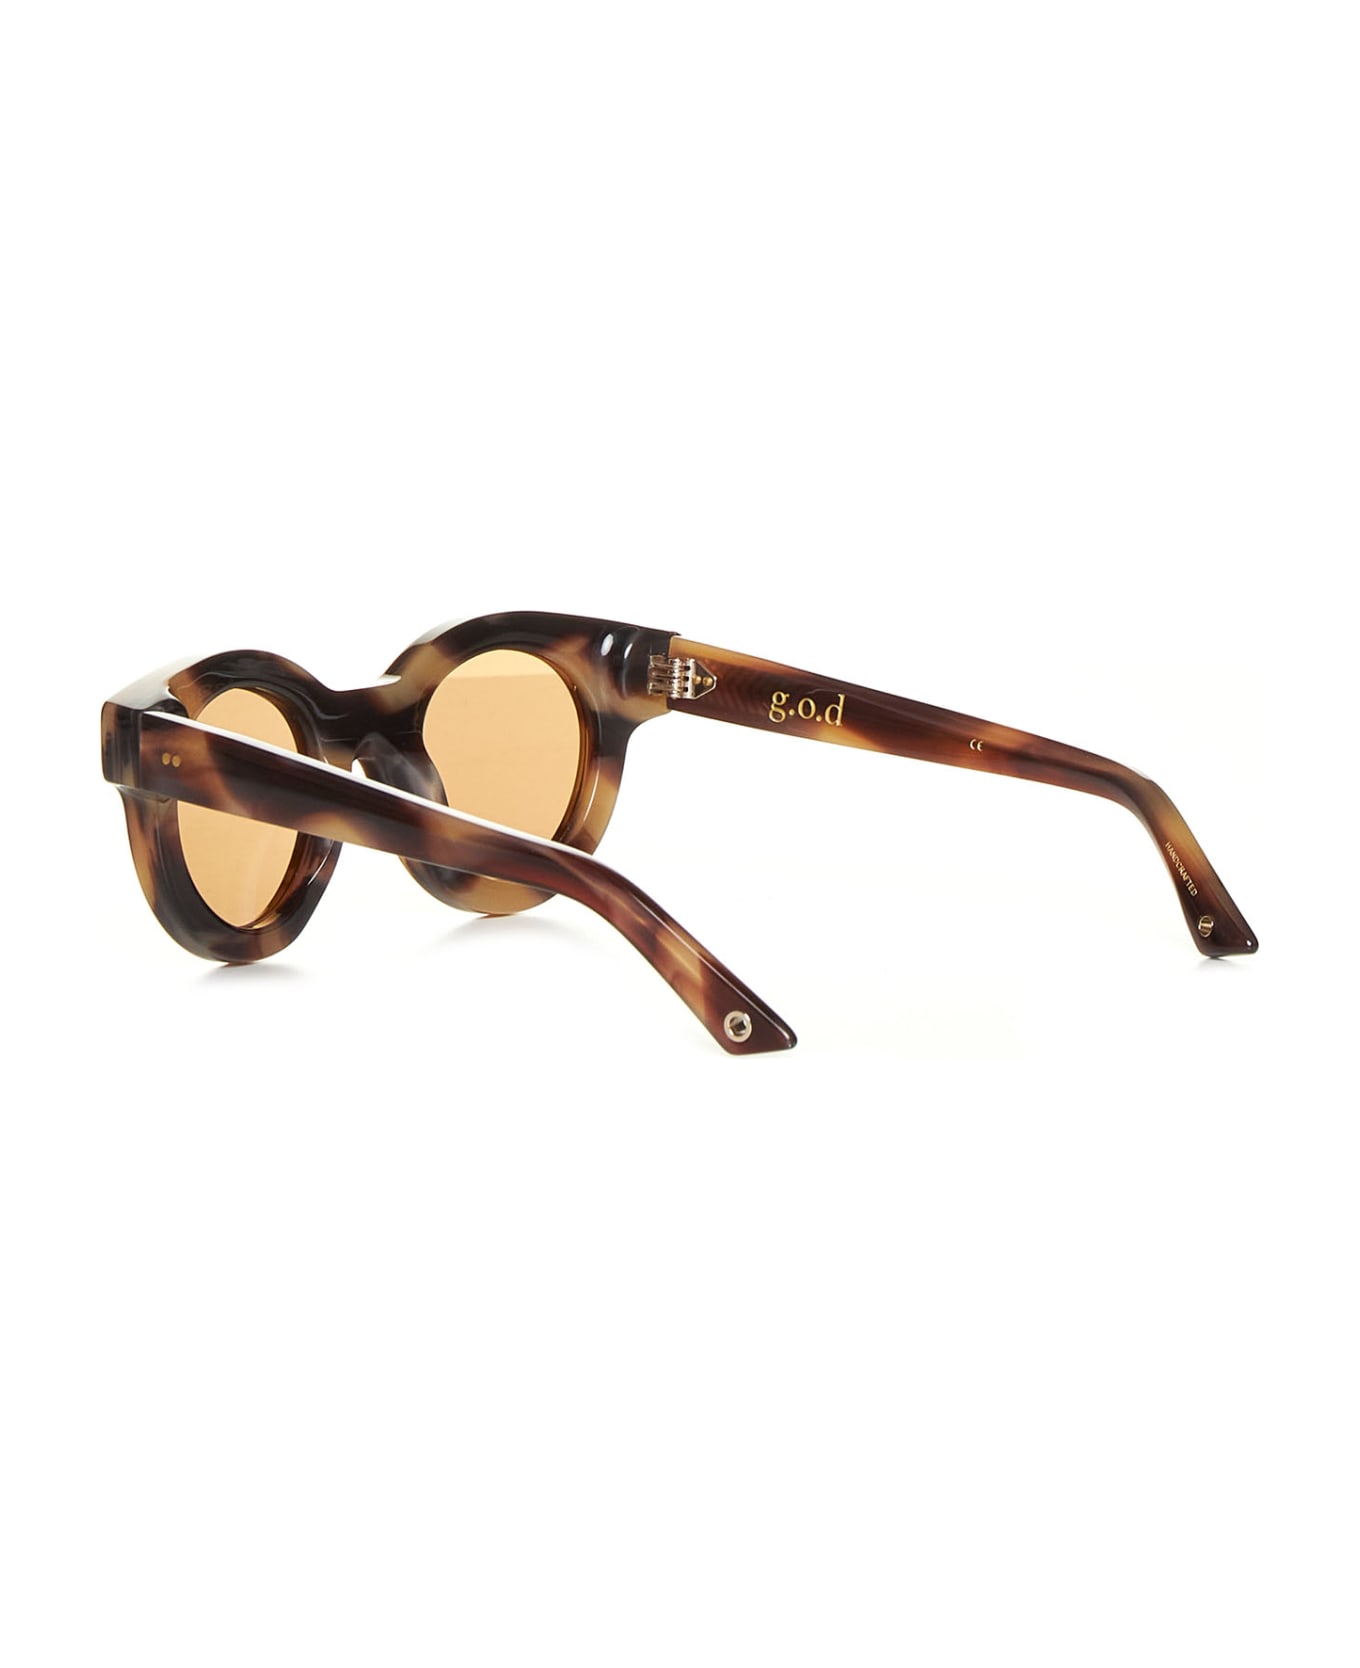 g.o.d Sunglasses - Sea tortoise w brown flash len